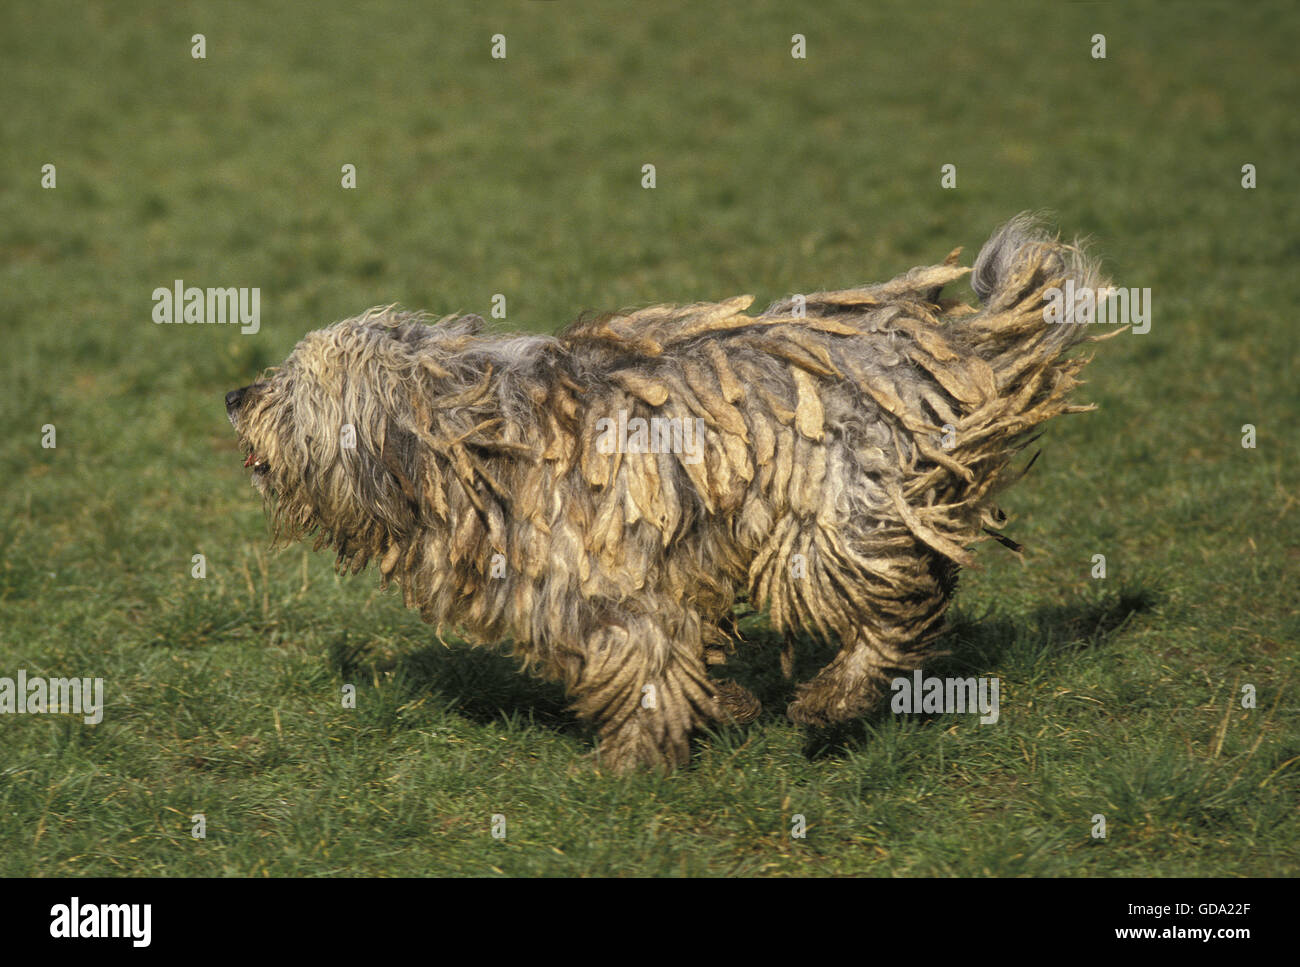 Bergamasco Sheepdog or Gergamese Shepherd, Adult running Stock Photo